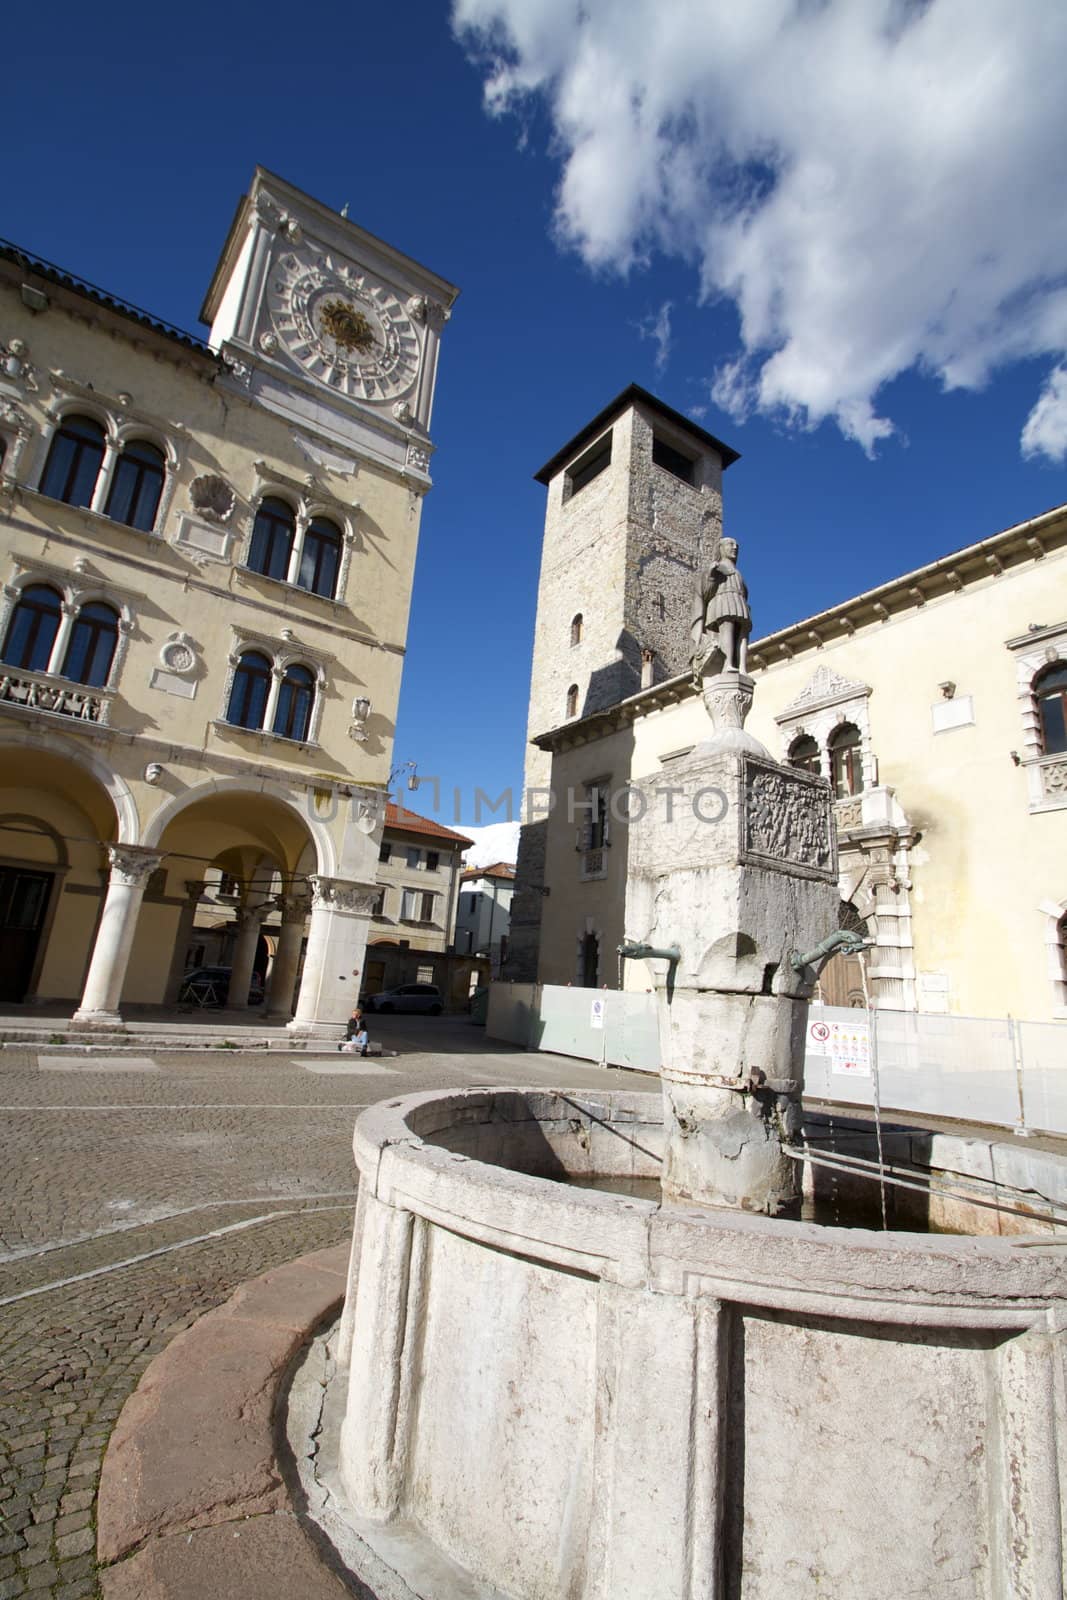 Palazzo dei Rettori and the Torre Civica, important buildings in the Dolomites city of Belluno by lifeinapixel